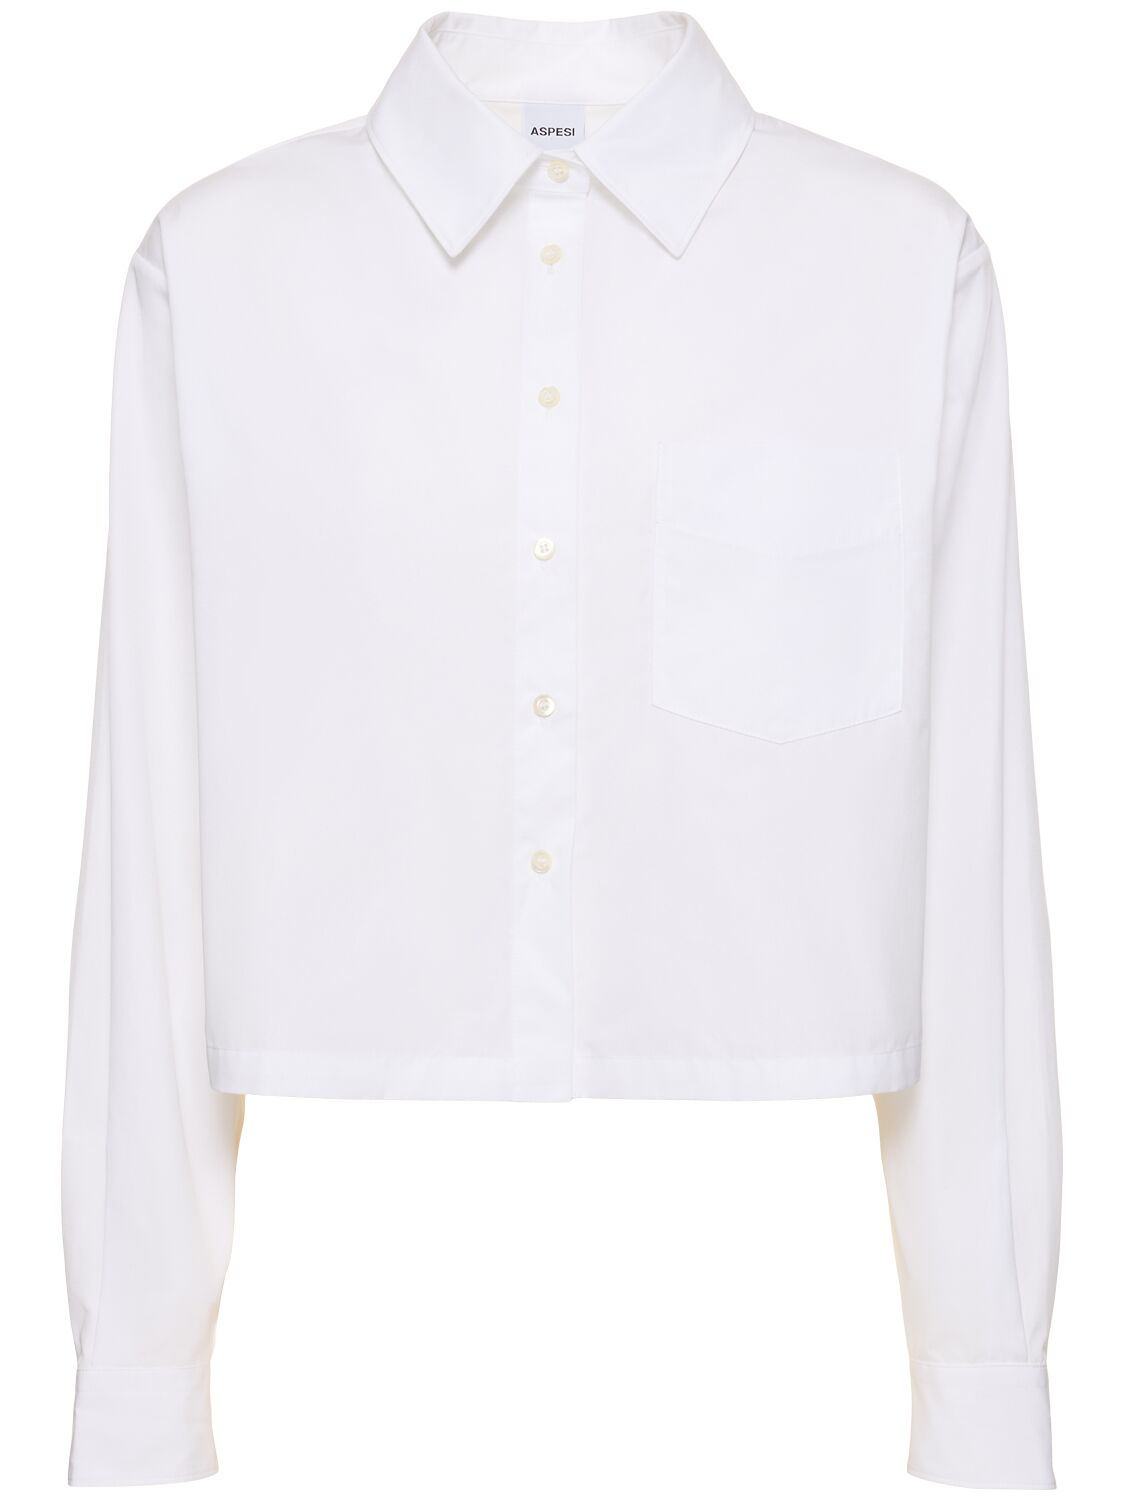 Aspesi Cotton Poplin Shirt W/ Breast Pocket In White